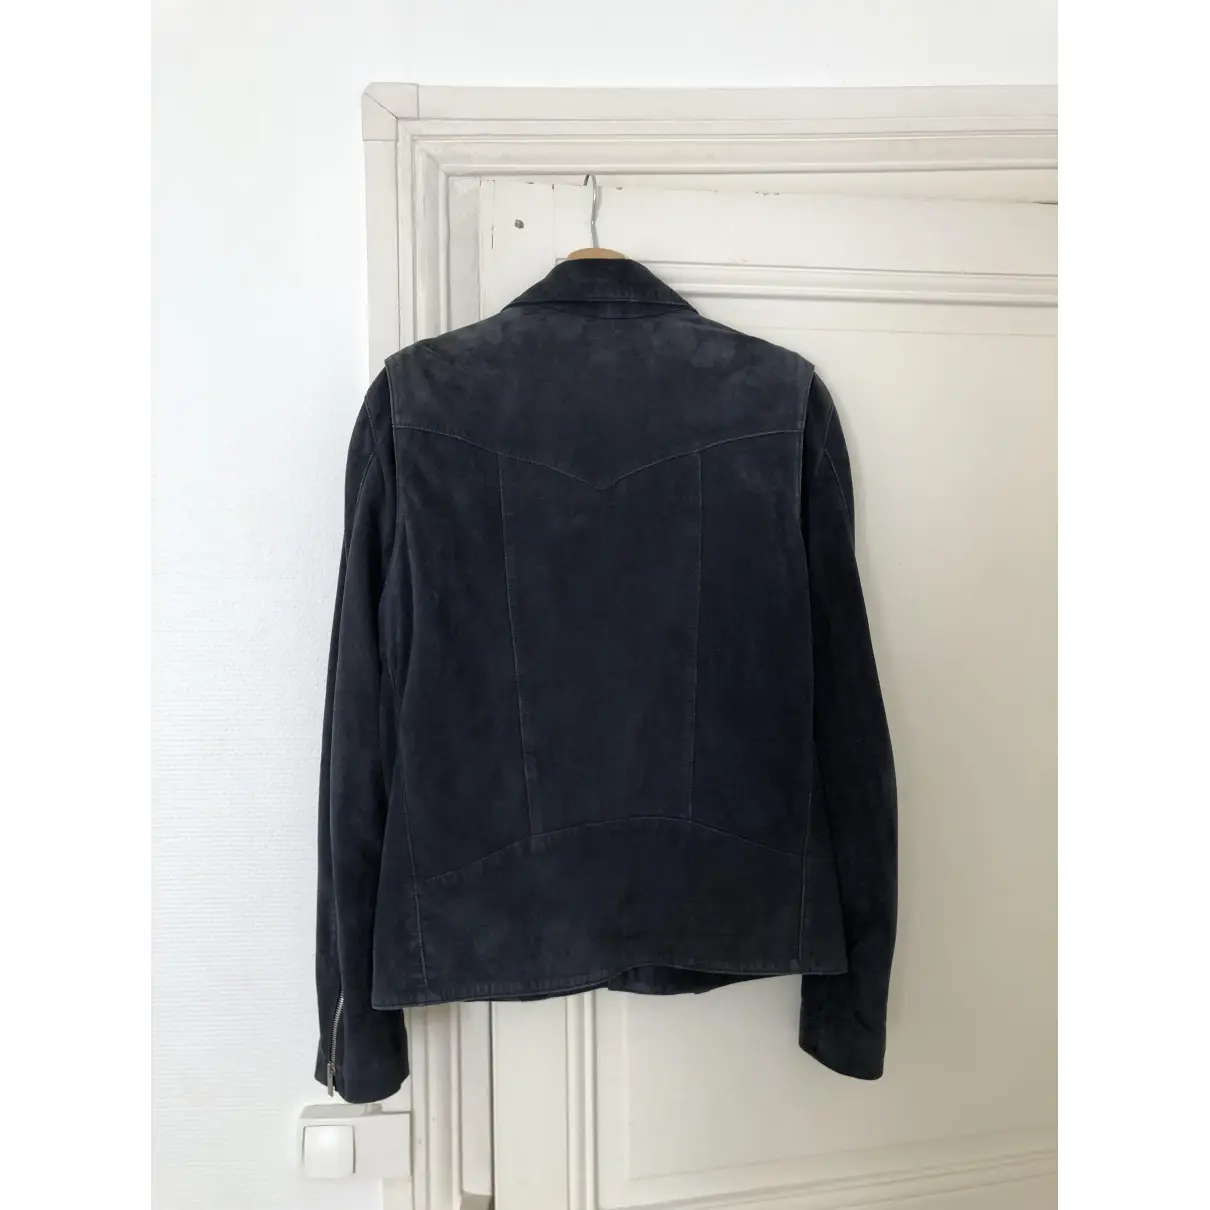 Buy The Kooples Spring Summer 2019 leather jacket online